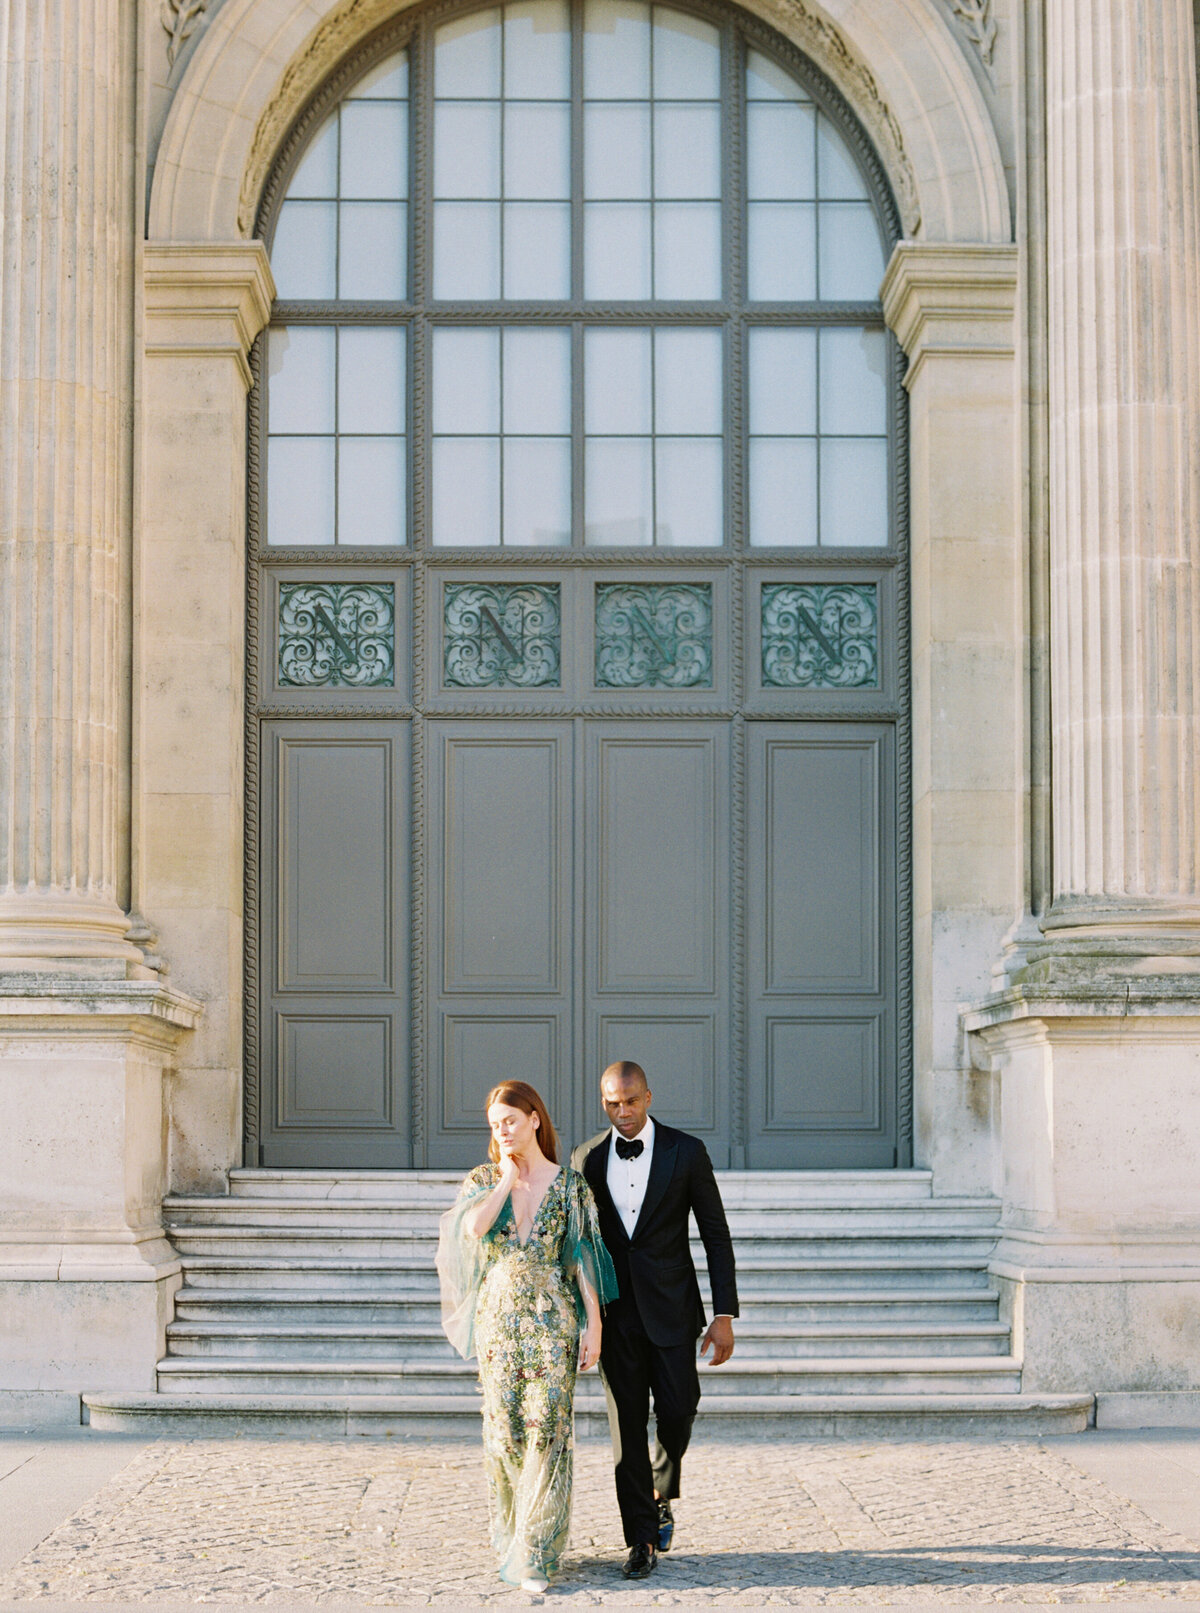 Paris Louvre Wedding Photographer - Janna Brown